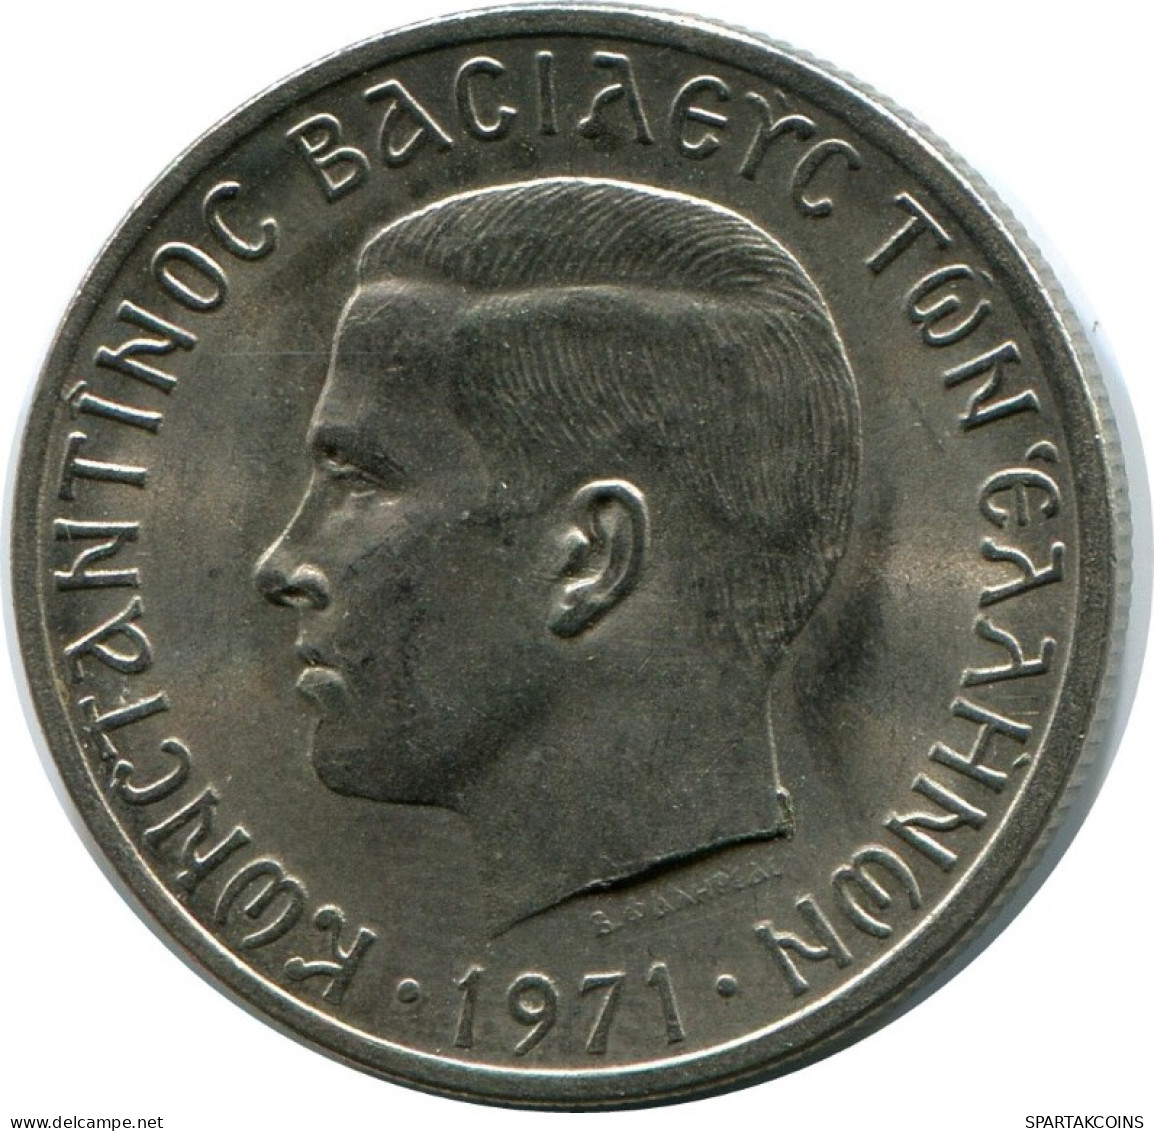 1 DRACHMA 1975 GRECIA GREECE Moneda Constantine II #AH614.3.E.A - Grecia